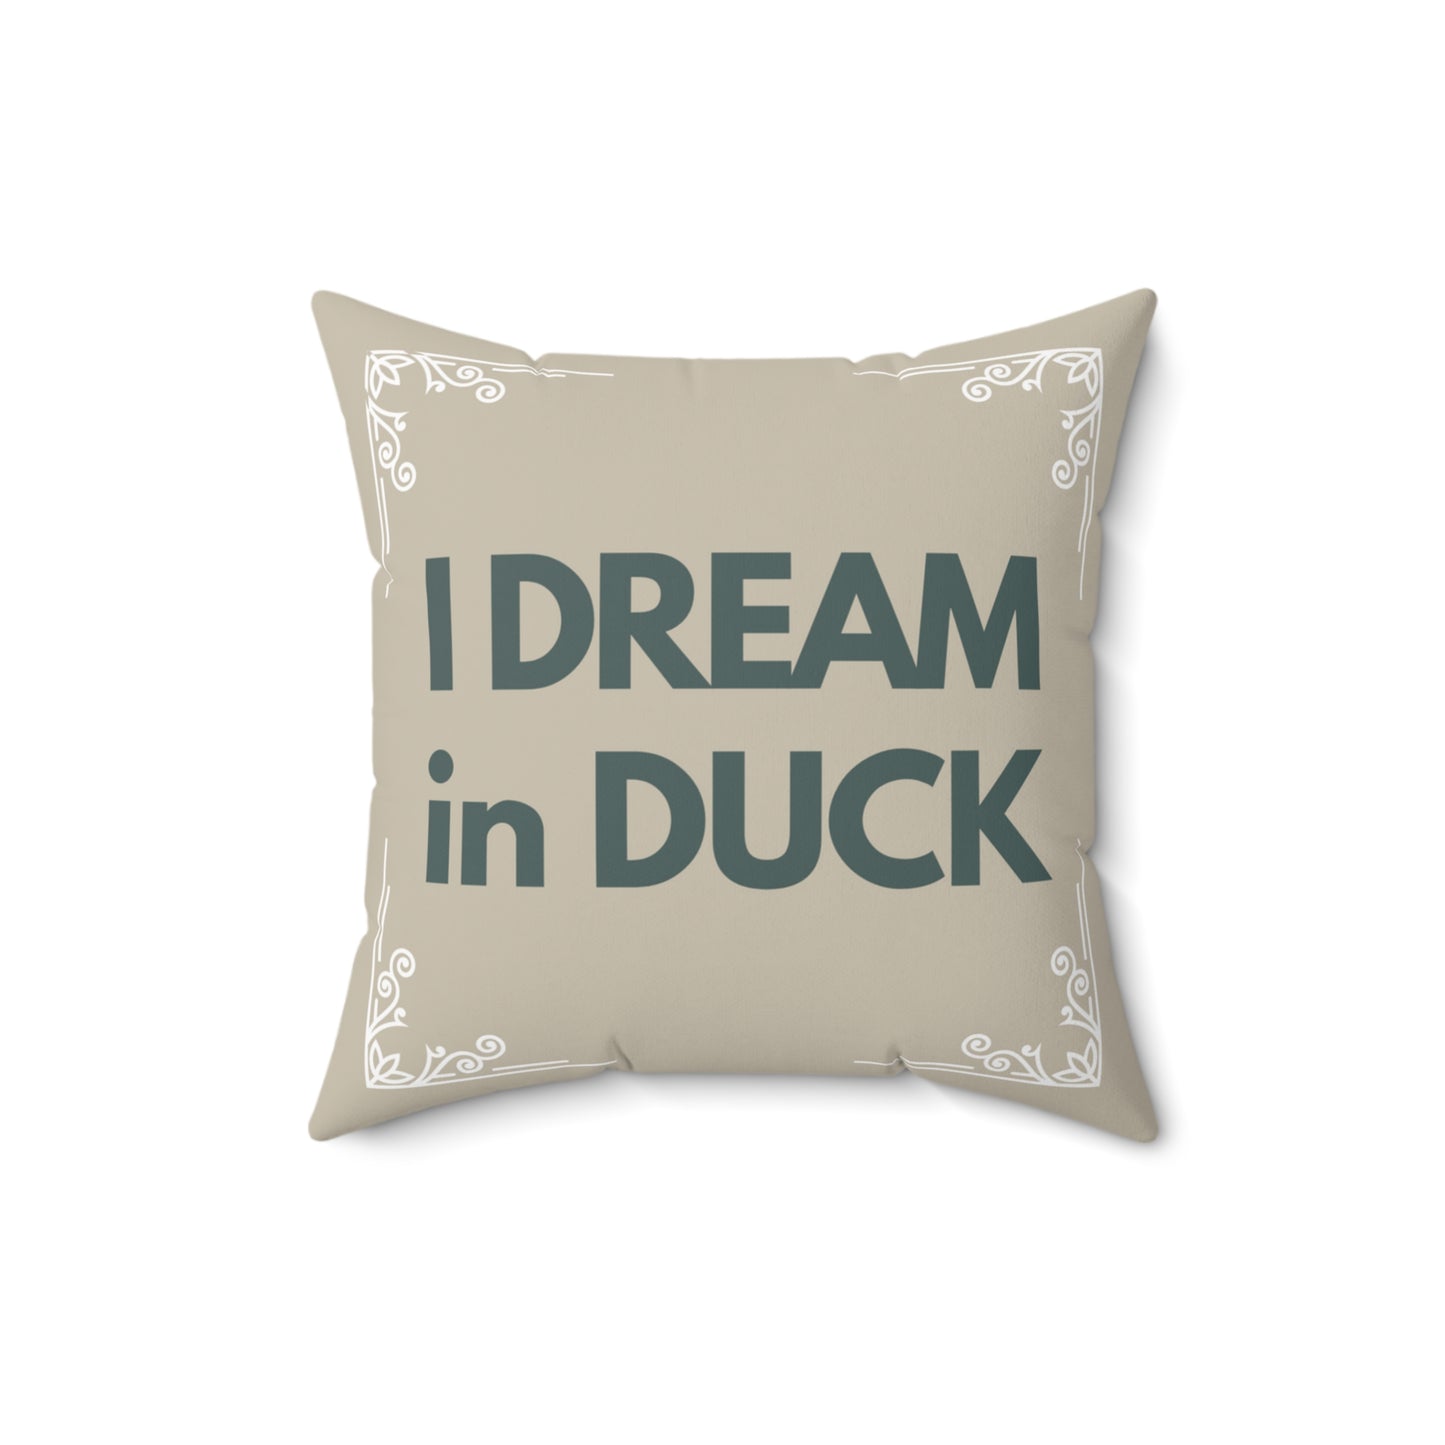 I DREAM Pillow in Cream/Olive